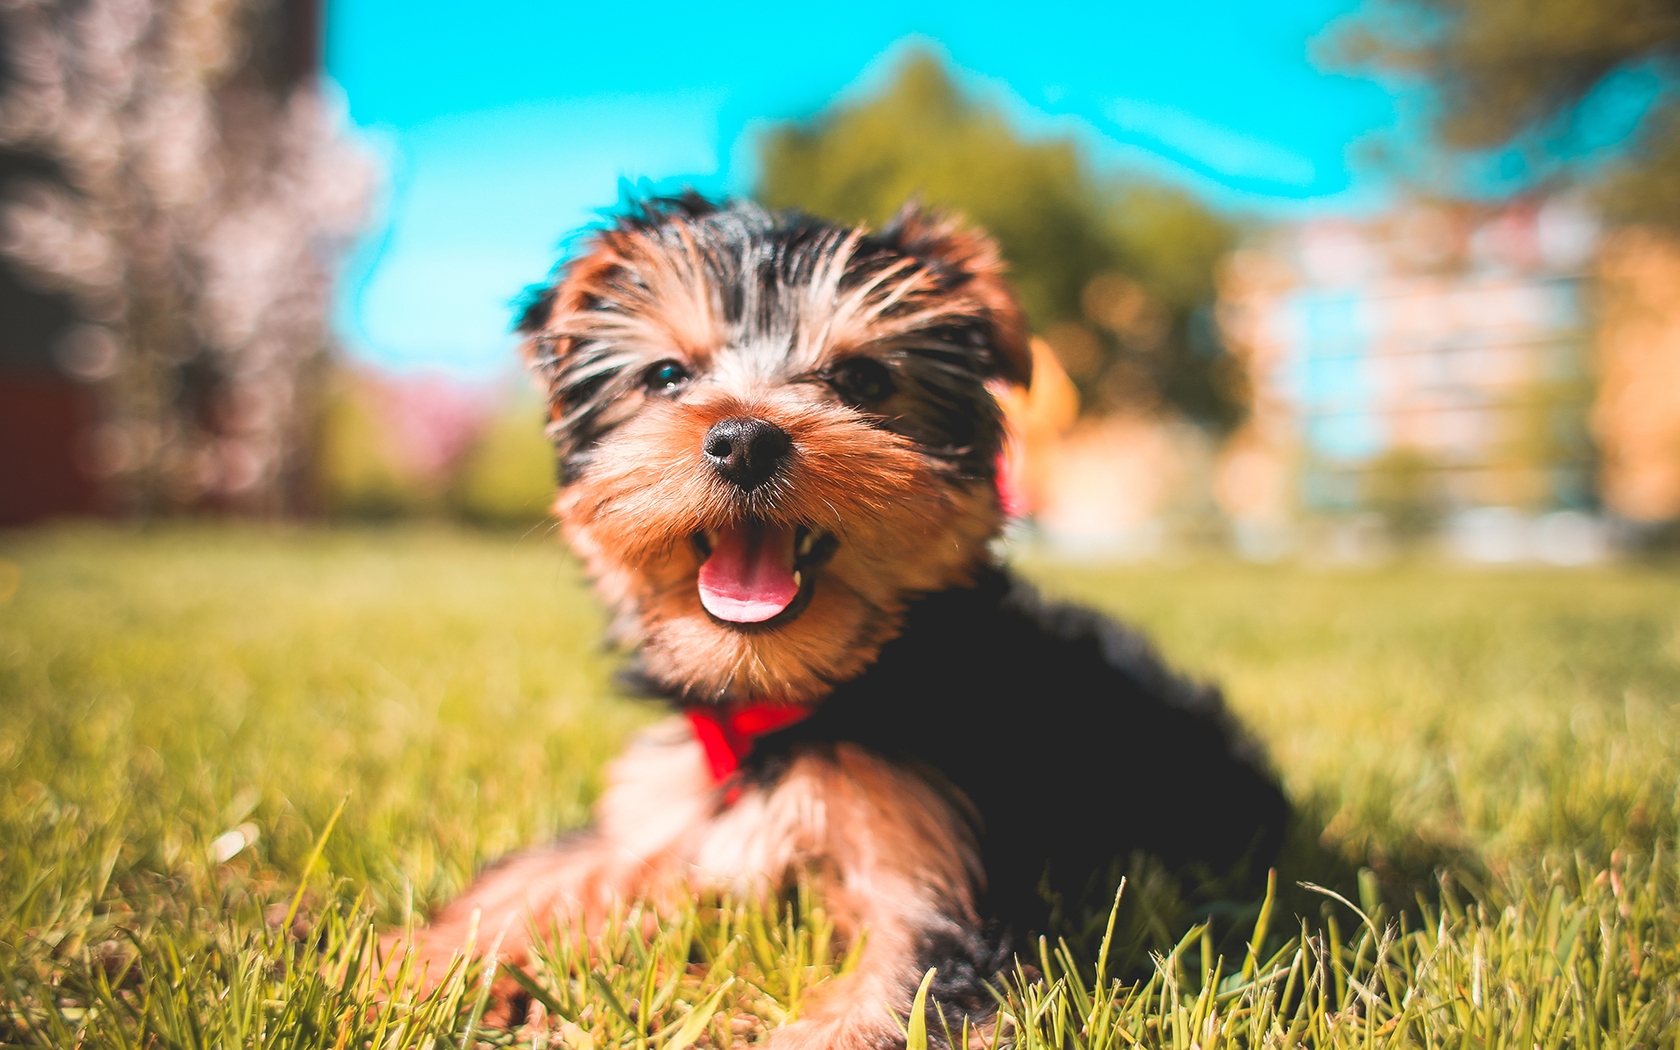 Картинка: Йоркширский терьер, порода, собака, щенок, трава, лужайка, солнечные лучи, лето